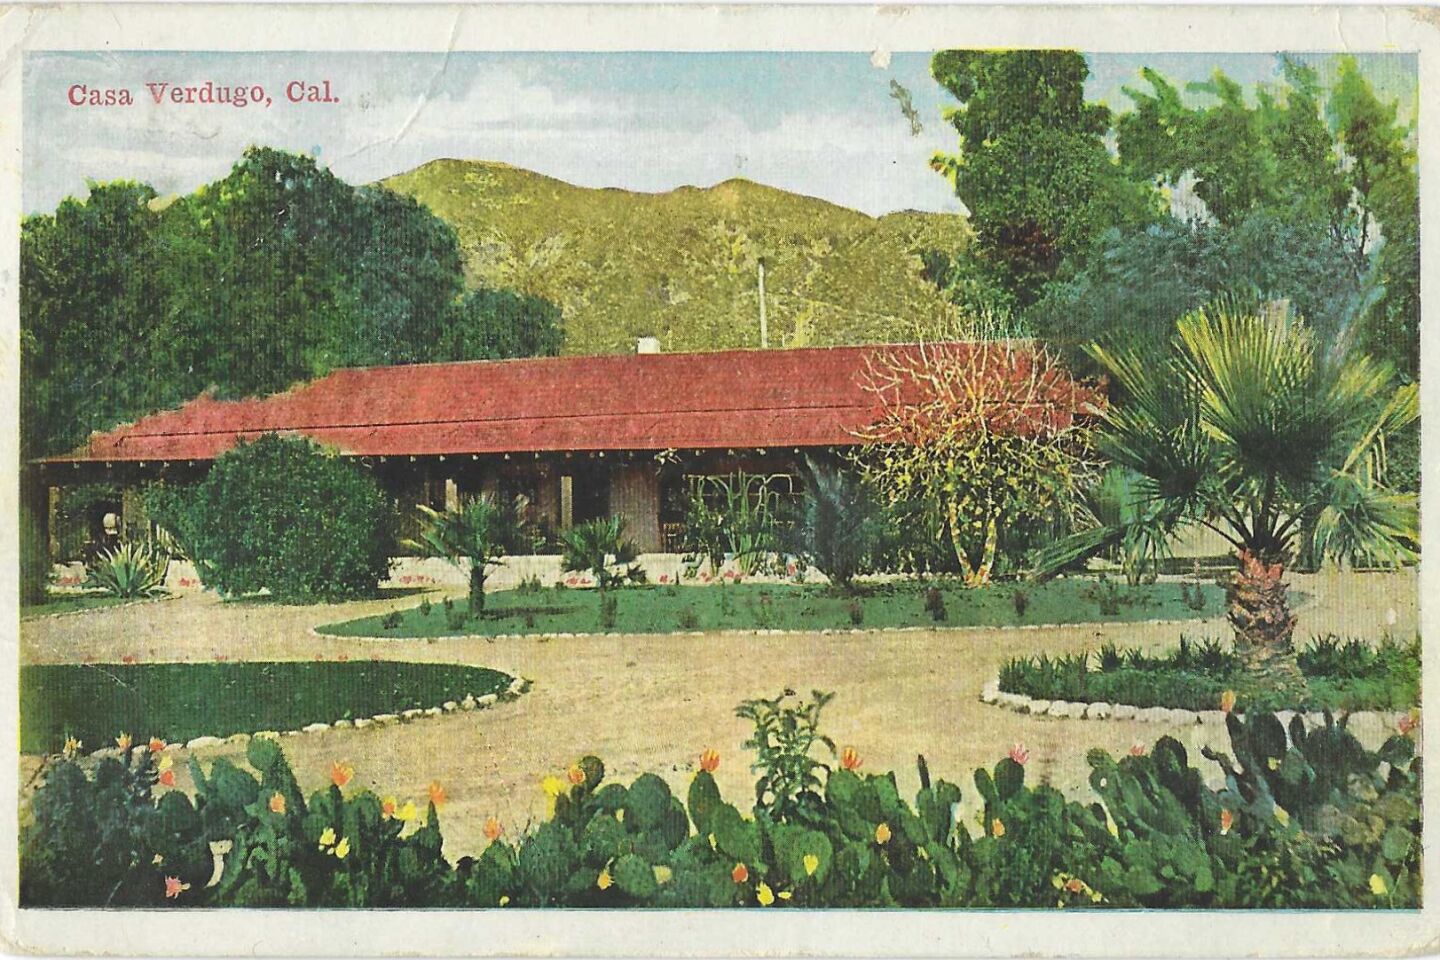 Another postcard of Casa Verdugo